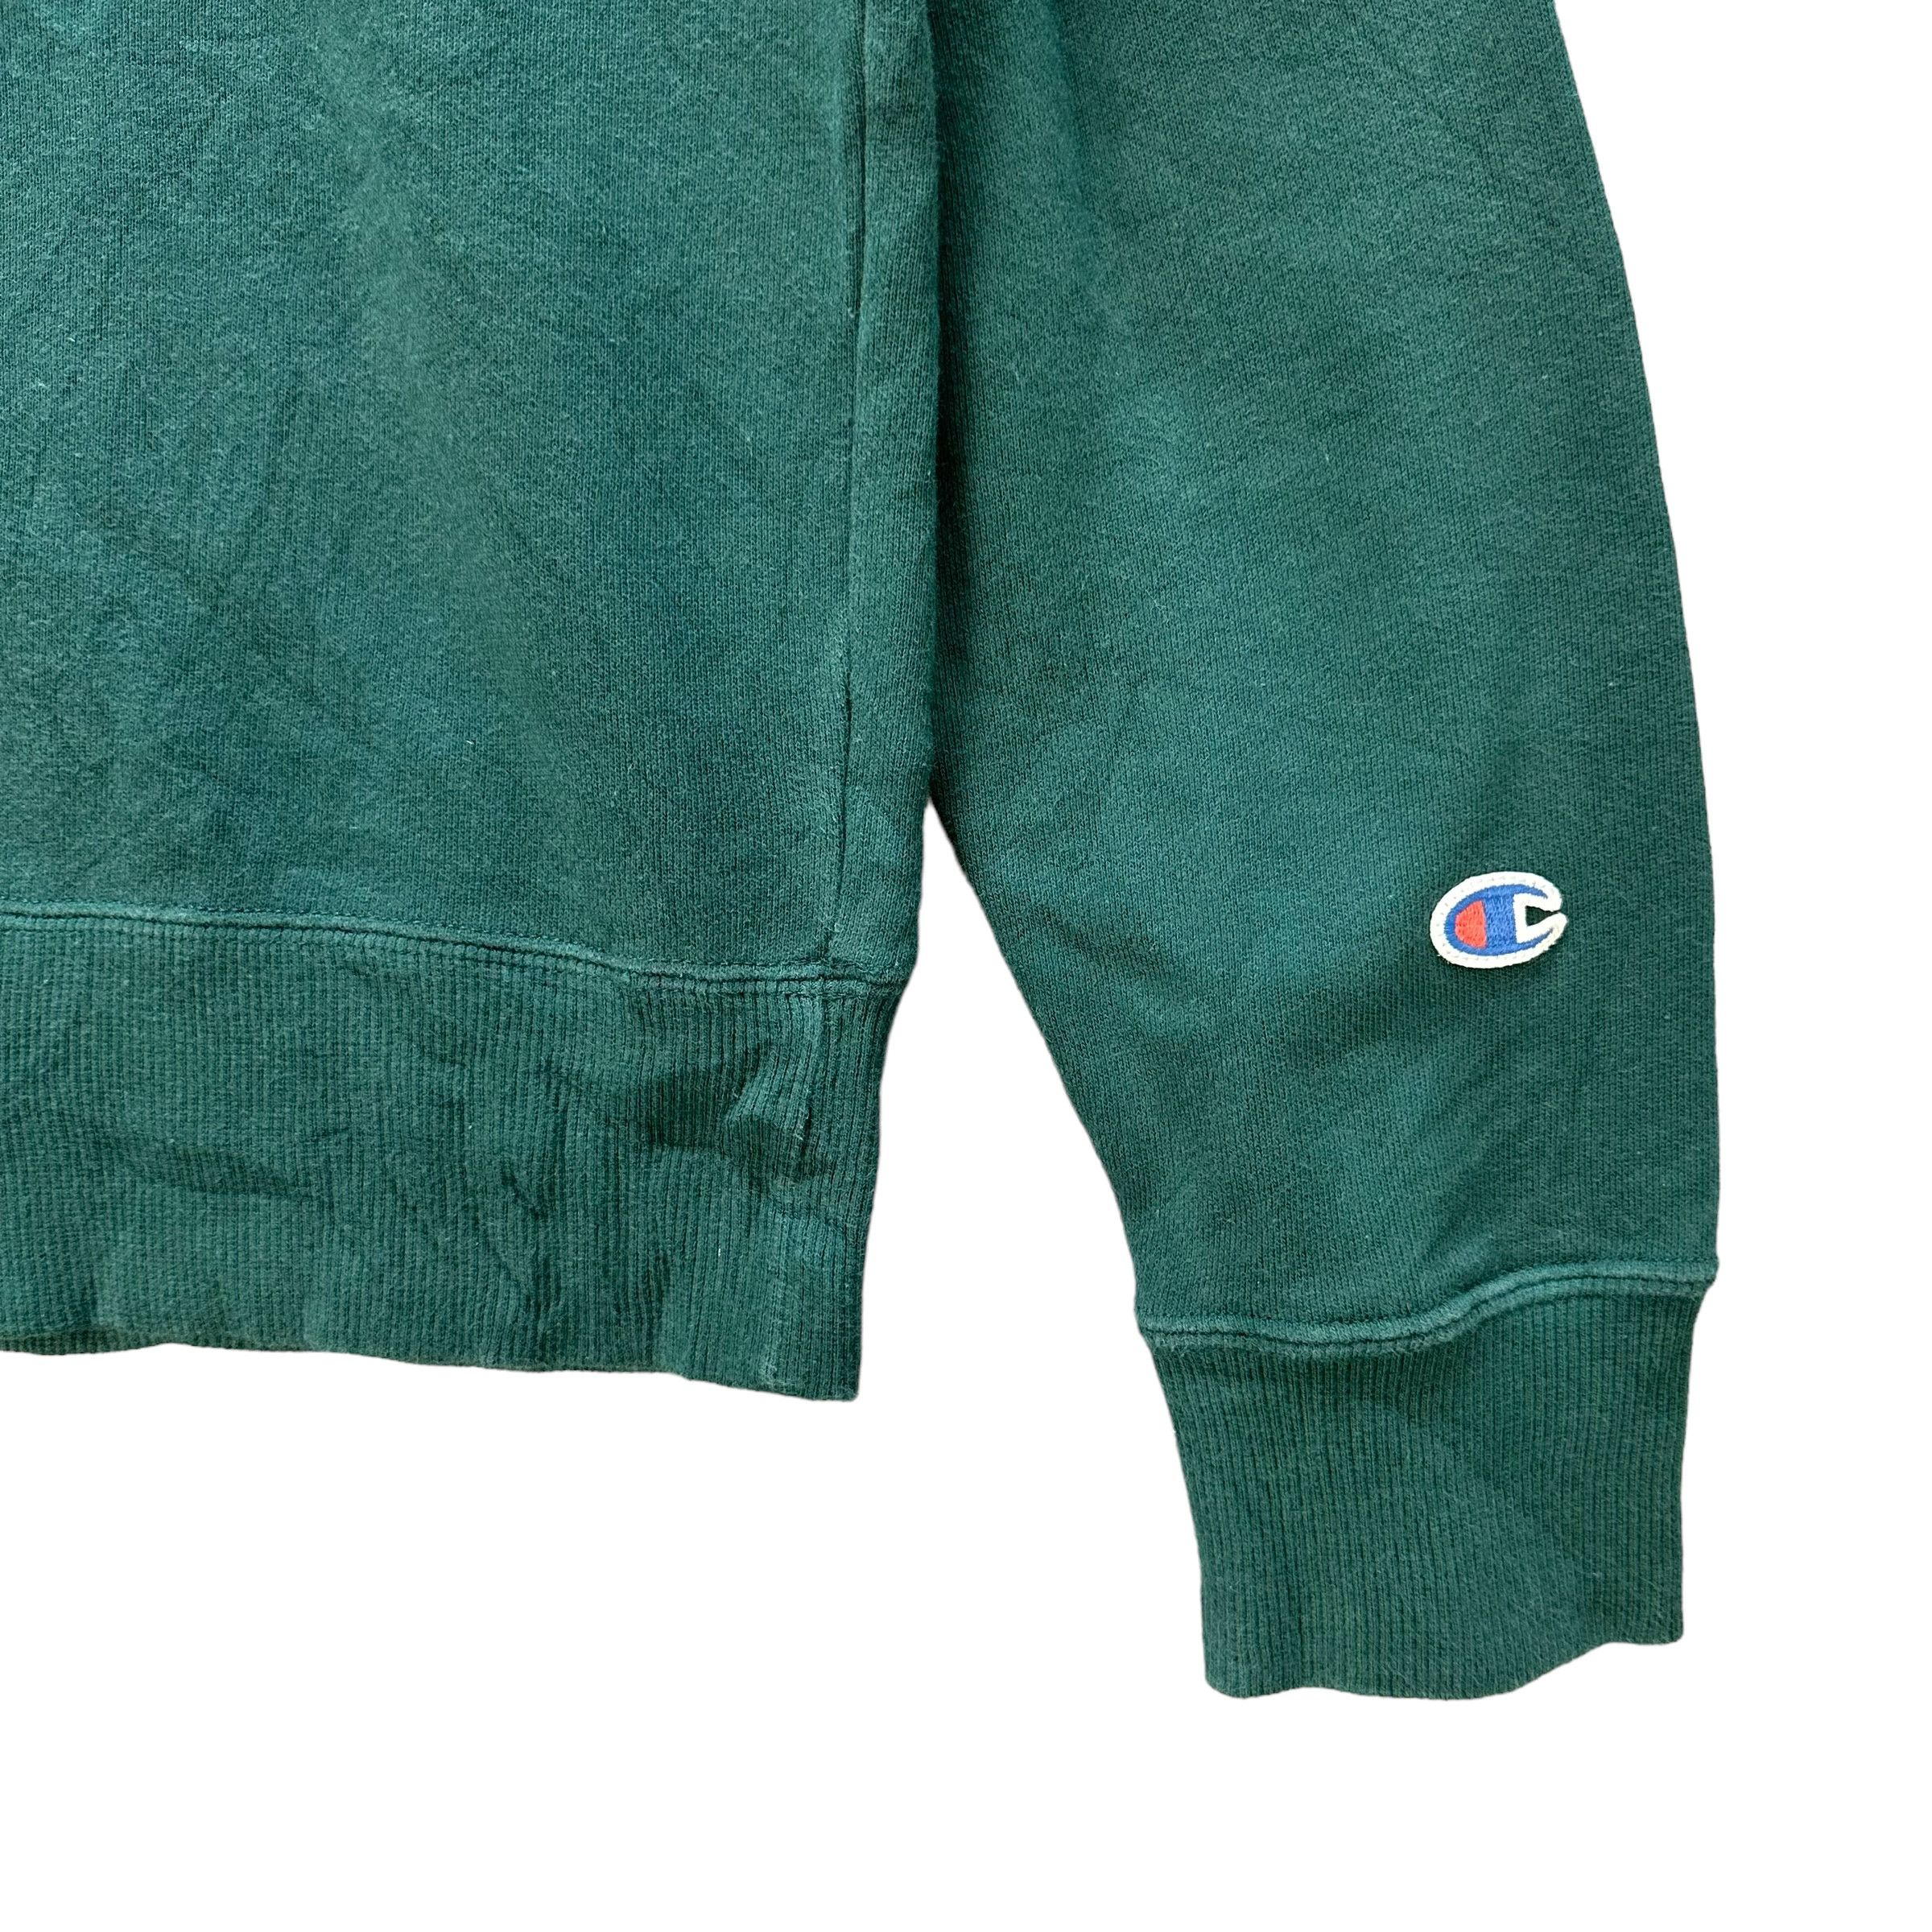 Champion Green Sweatshirts #9125-59 - 5